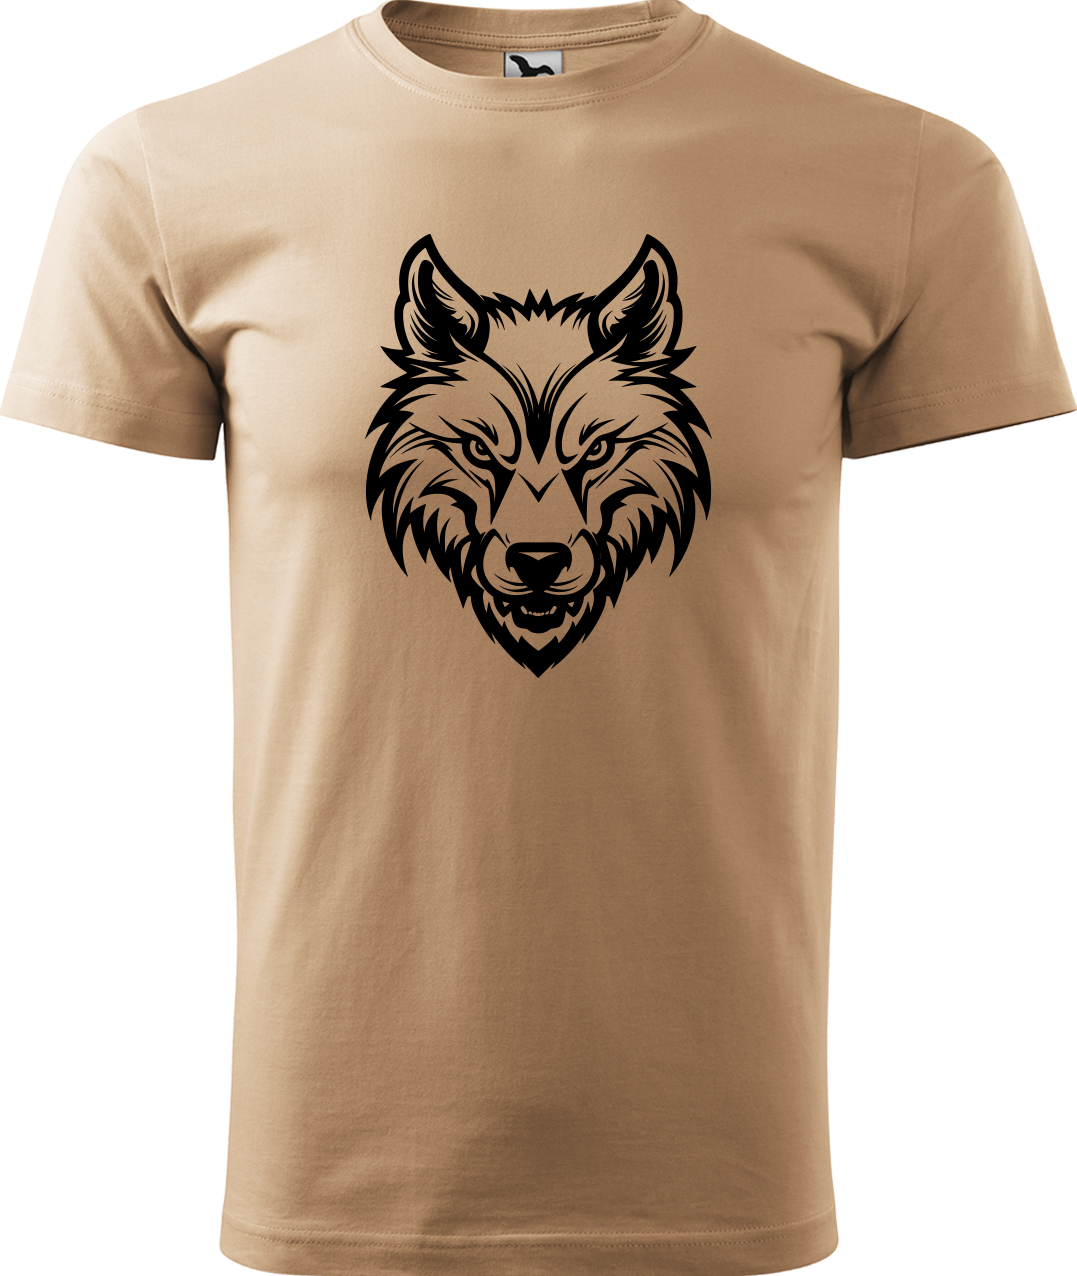 Pánské tričko s vlkem - Alfa samec Velikost: XL, Barva: Písková (08), Střih: pánský